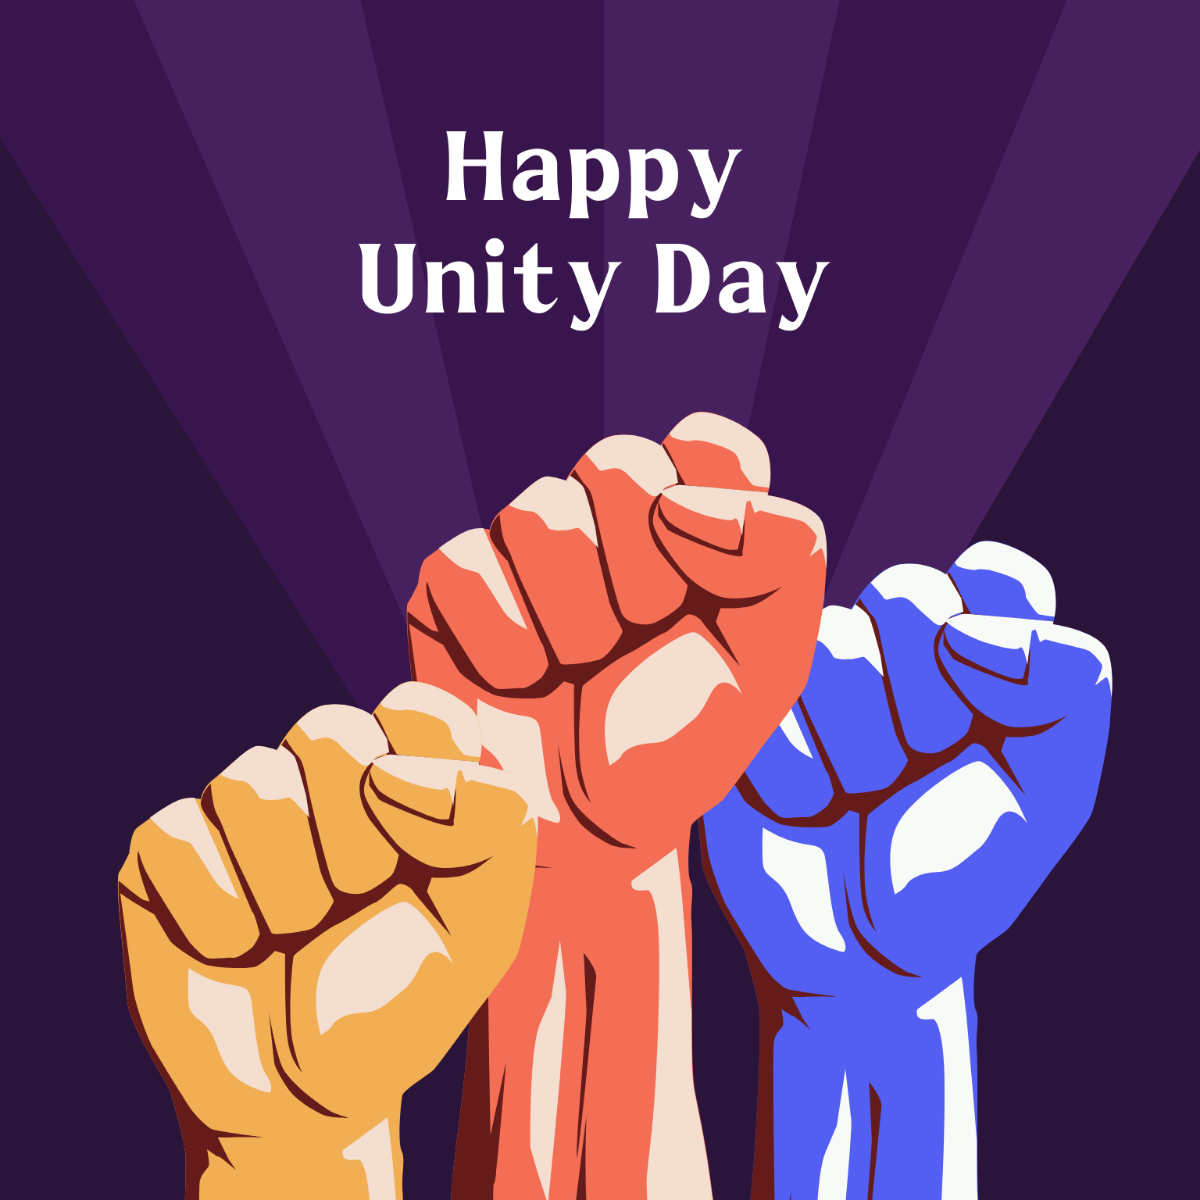 Happy Unity Day Illustration